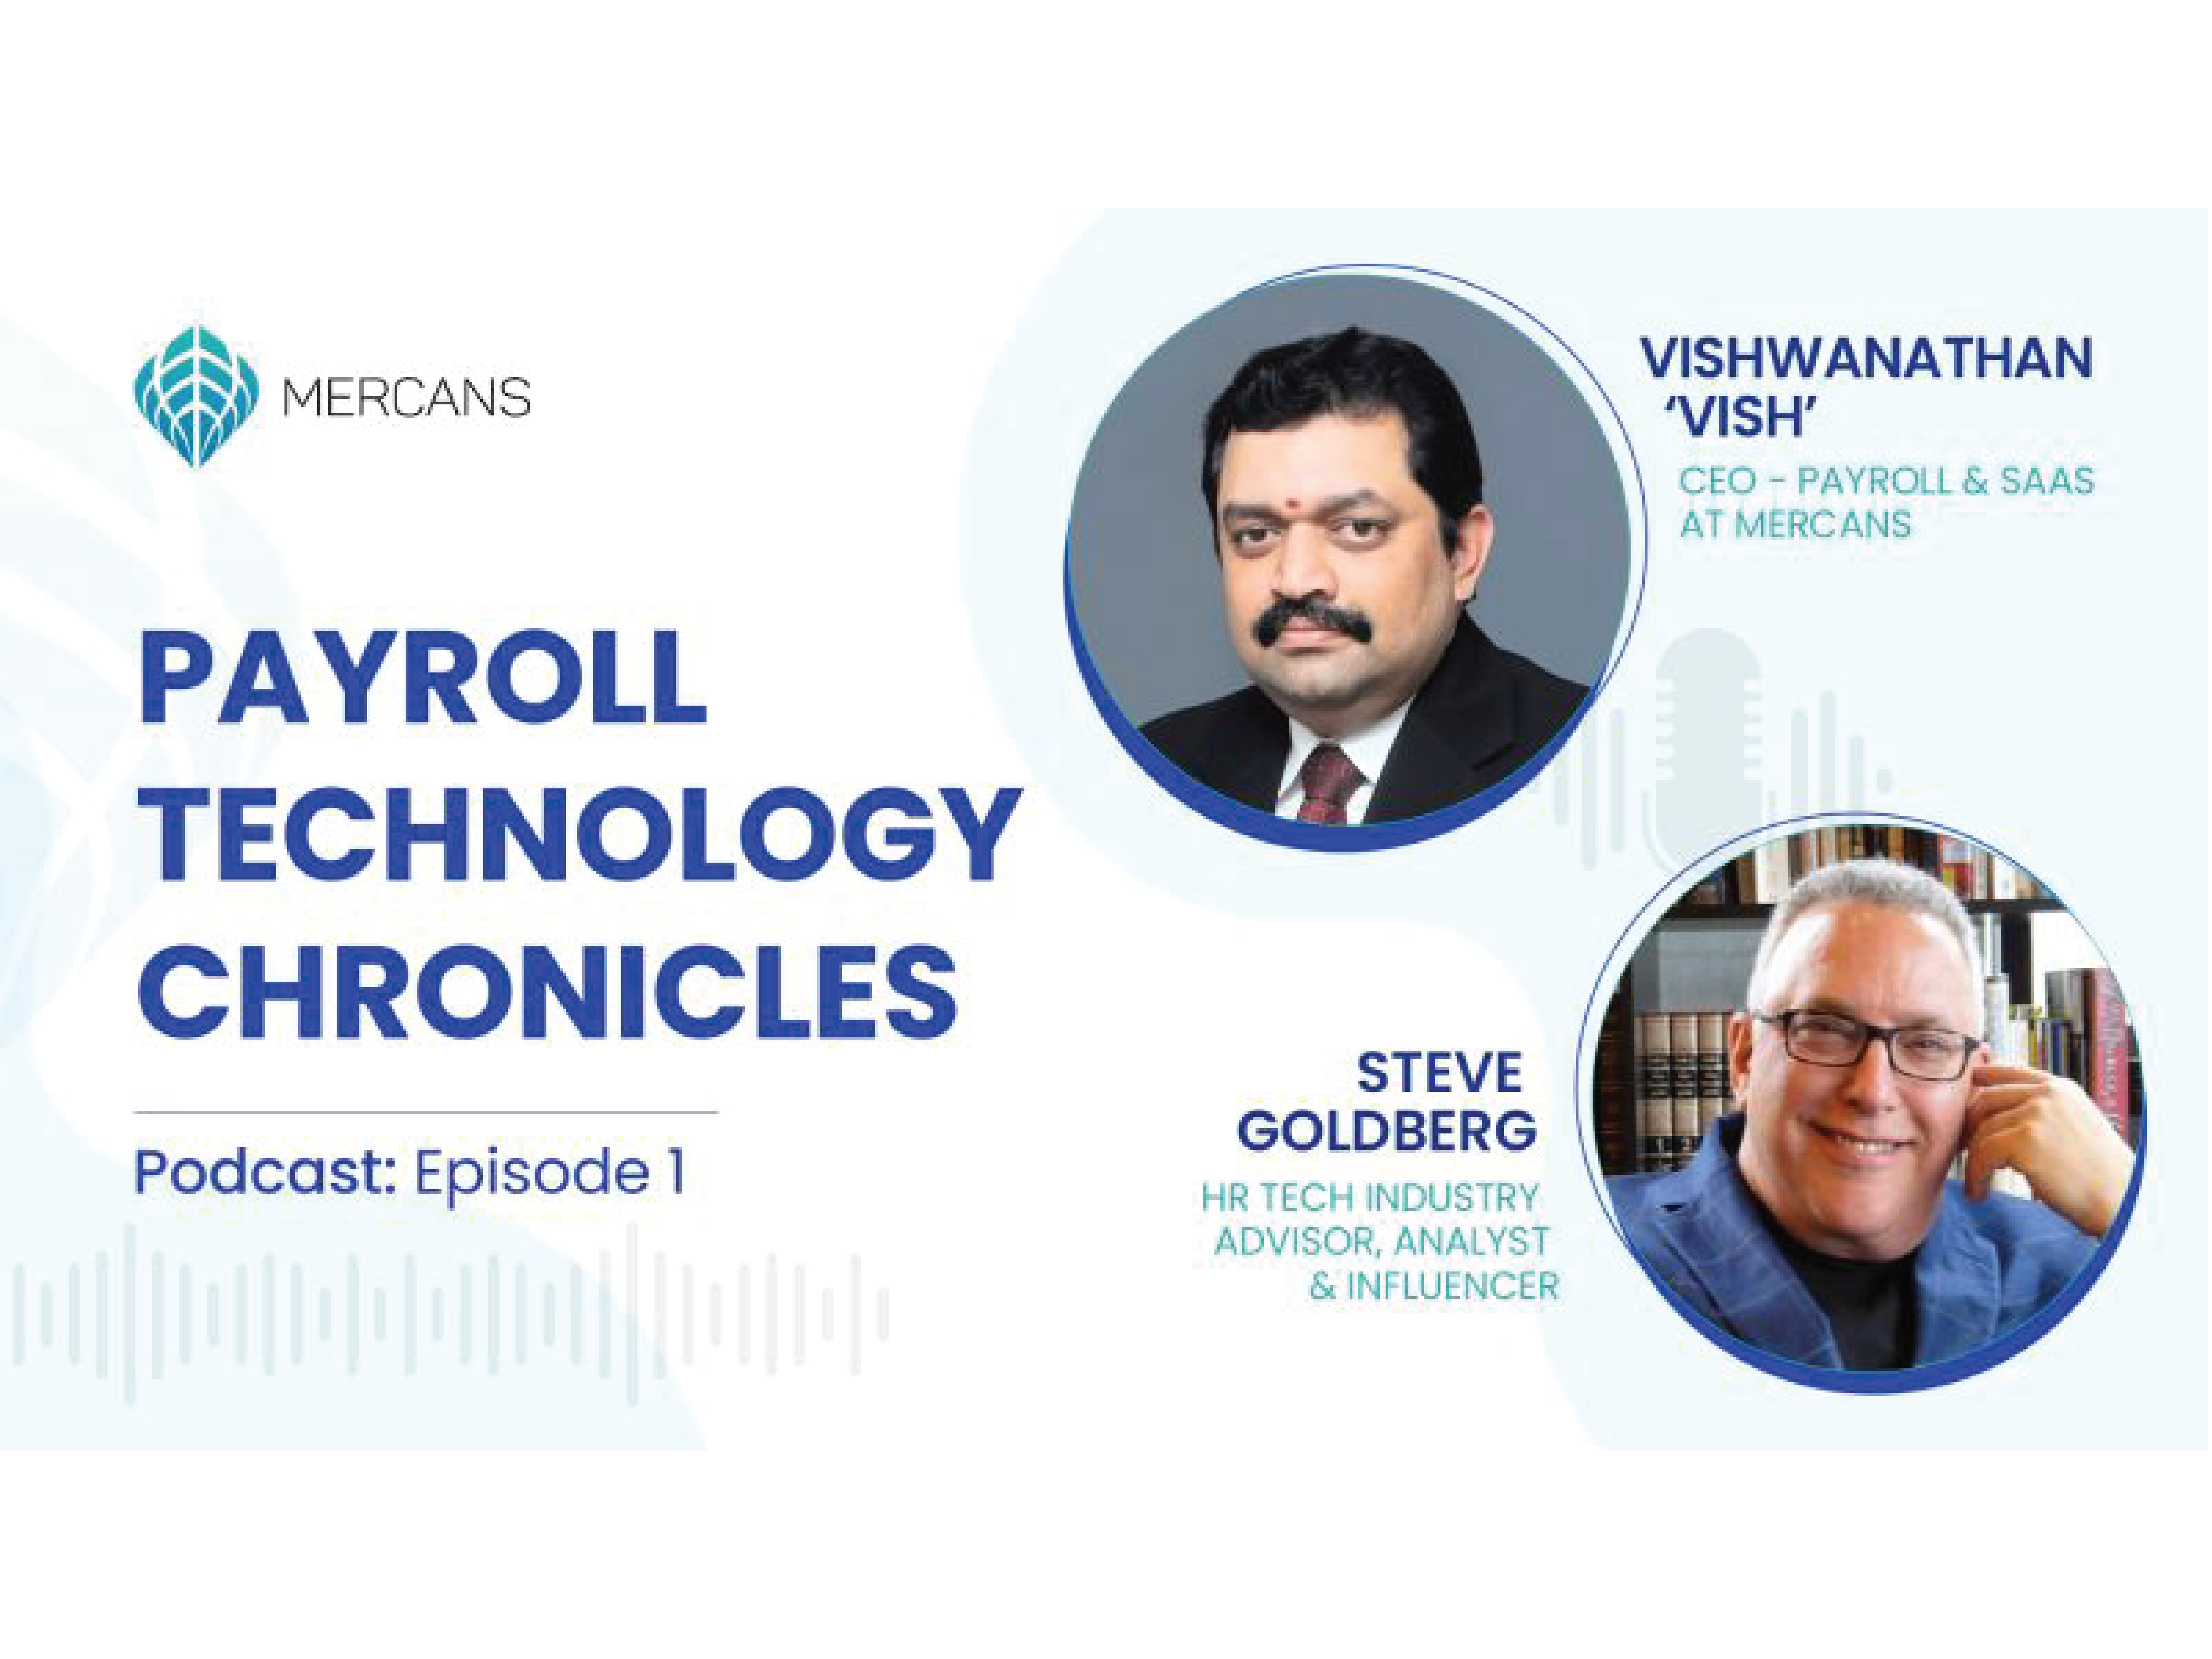 Payroll Technology Chronicles Podcast - Mercans - Thumbnail